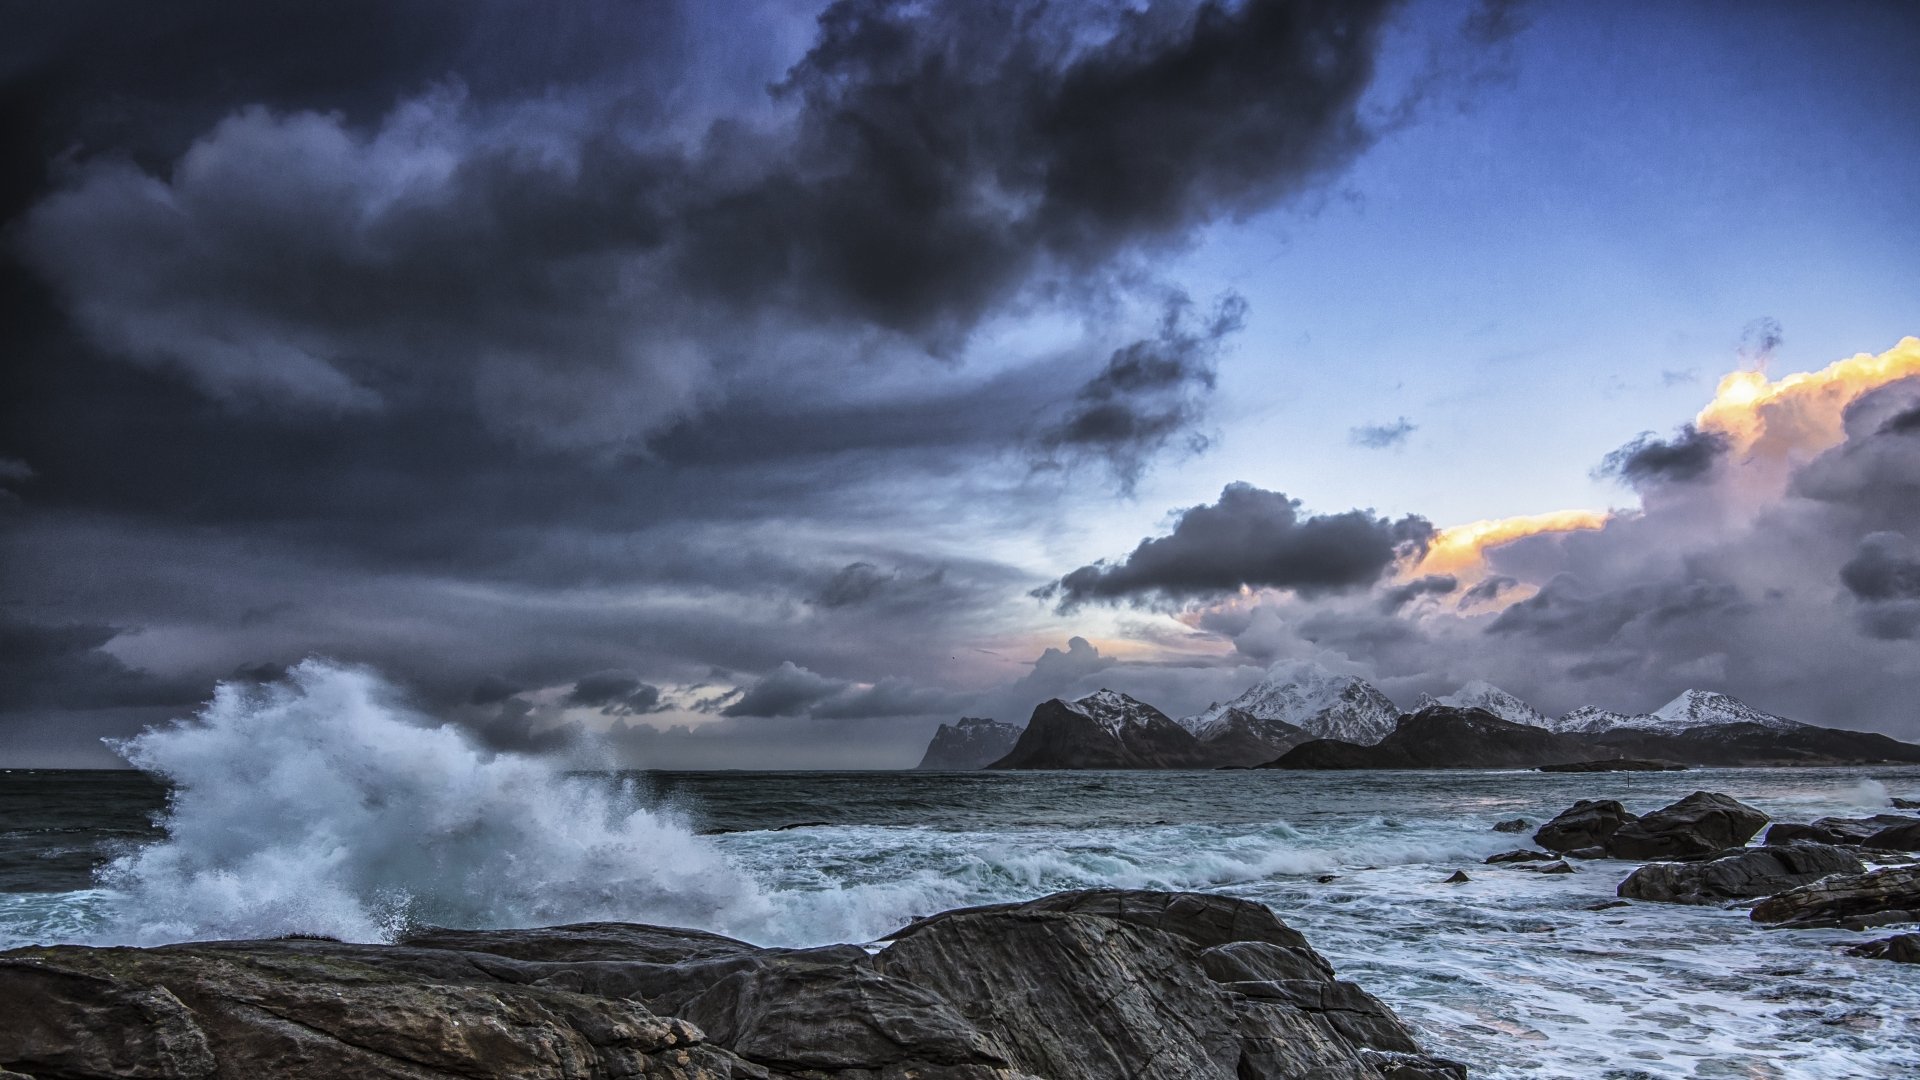 Download Seashore Norway Lofoten Islands Nature Coastline  4k Ultra HD Wallpaper by Stein Liland